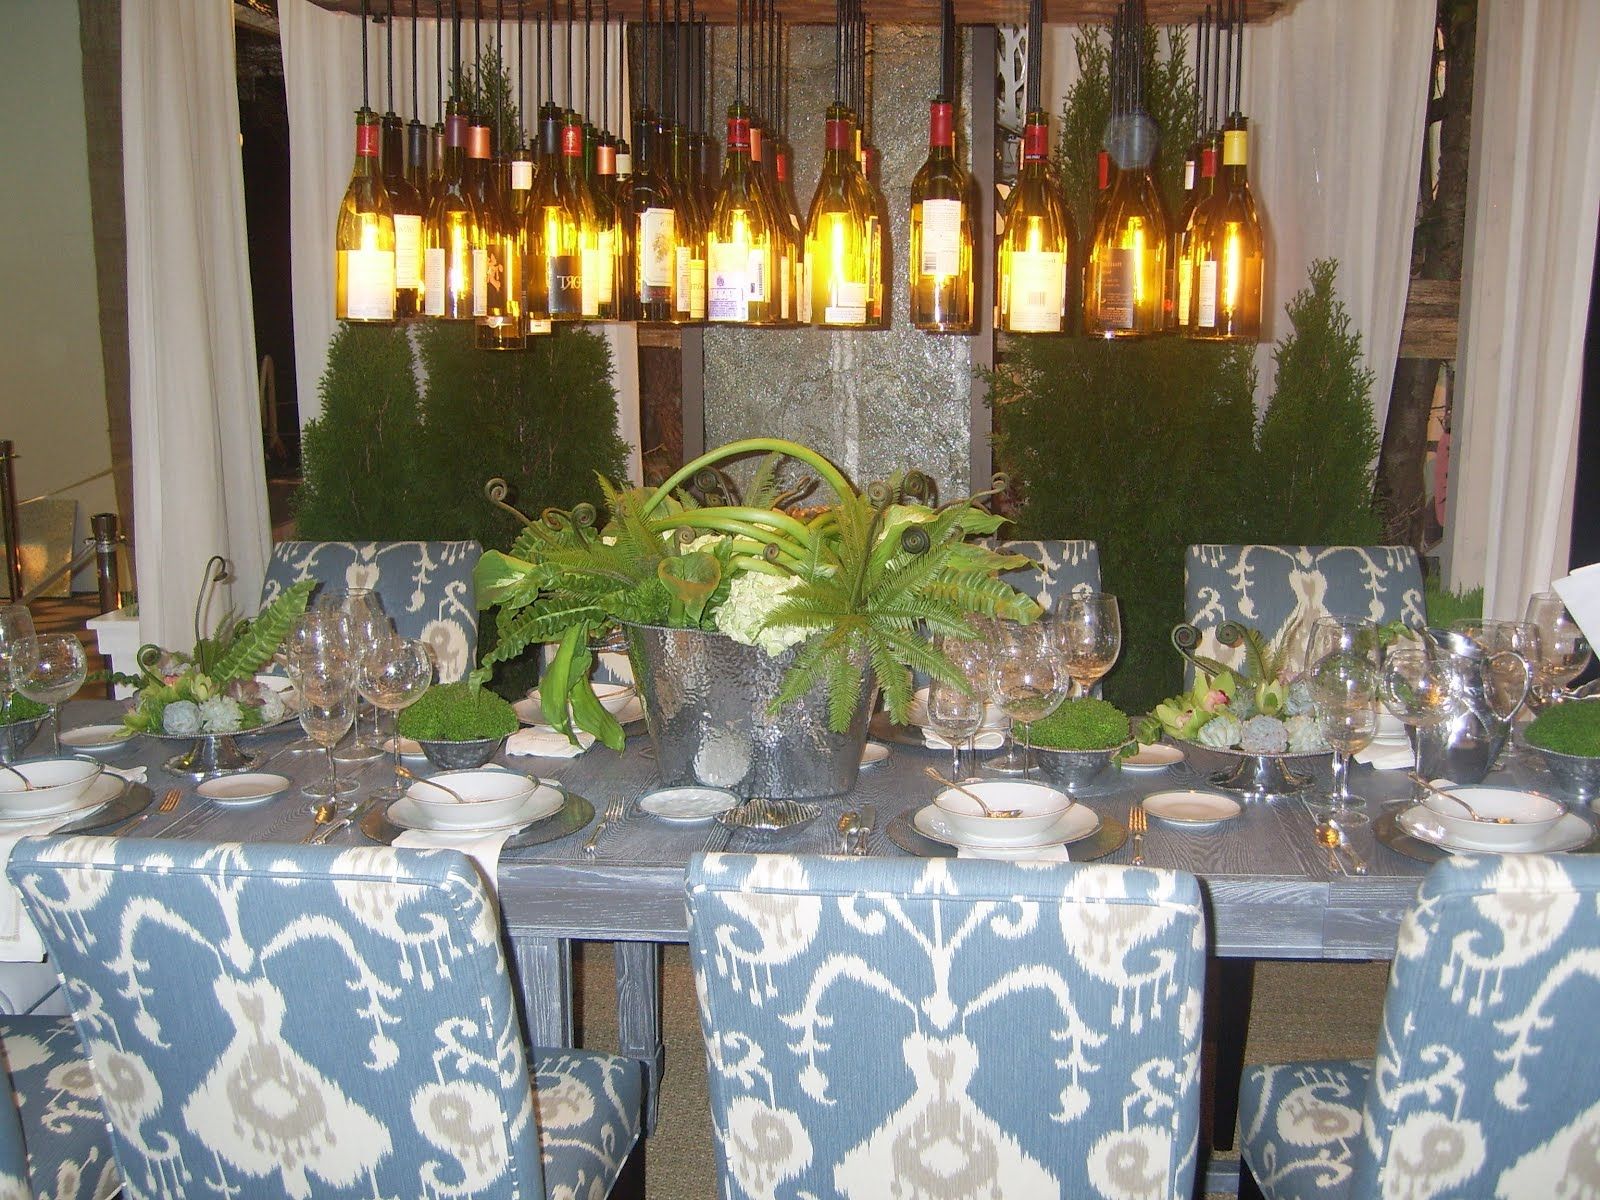 Natural Succulent Plants Centerpiece Under Wine Bottle Chandelier Plus Blue Floral Upholstered Chairs Decor (Photo 2425 of 7825)